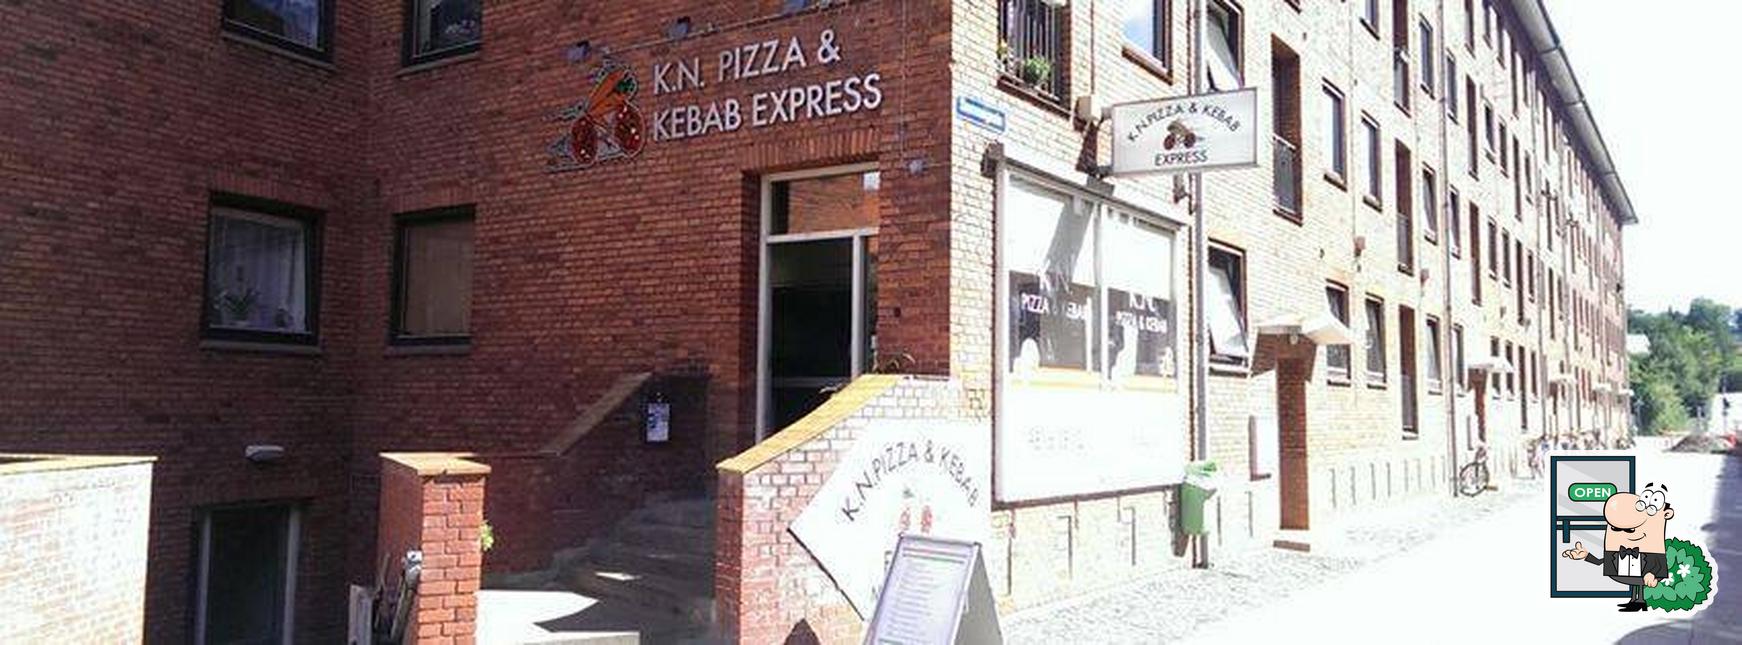 The exterior of K.N. Pizza & Kebab Express